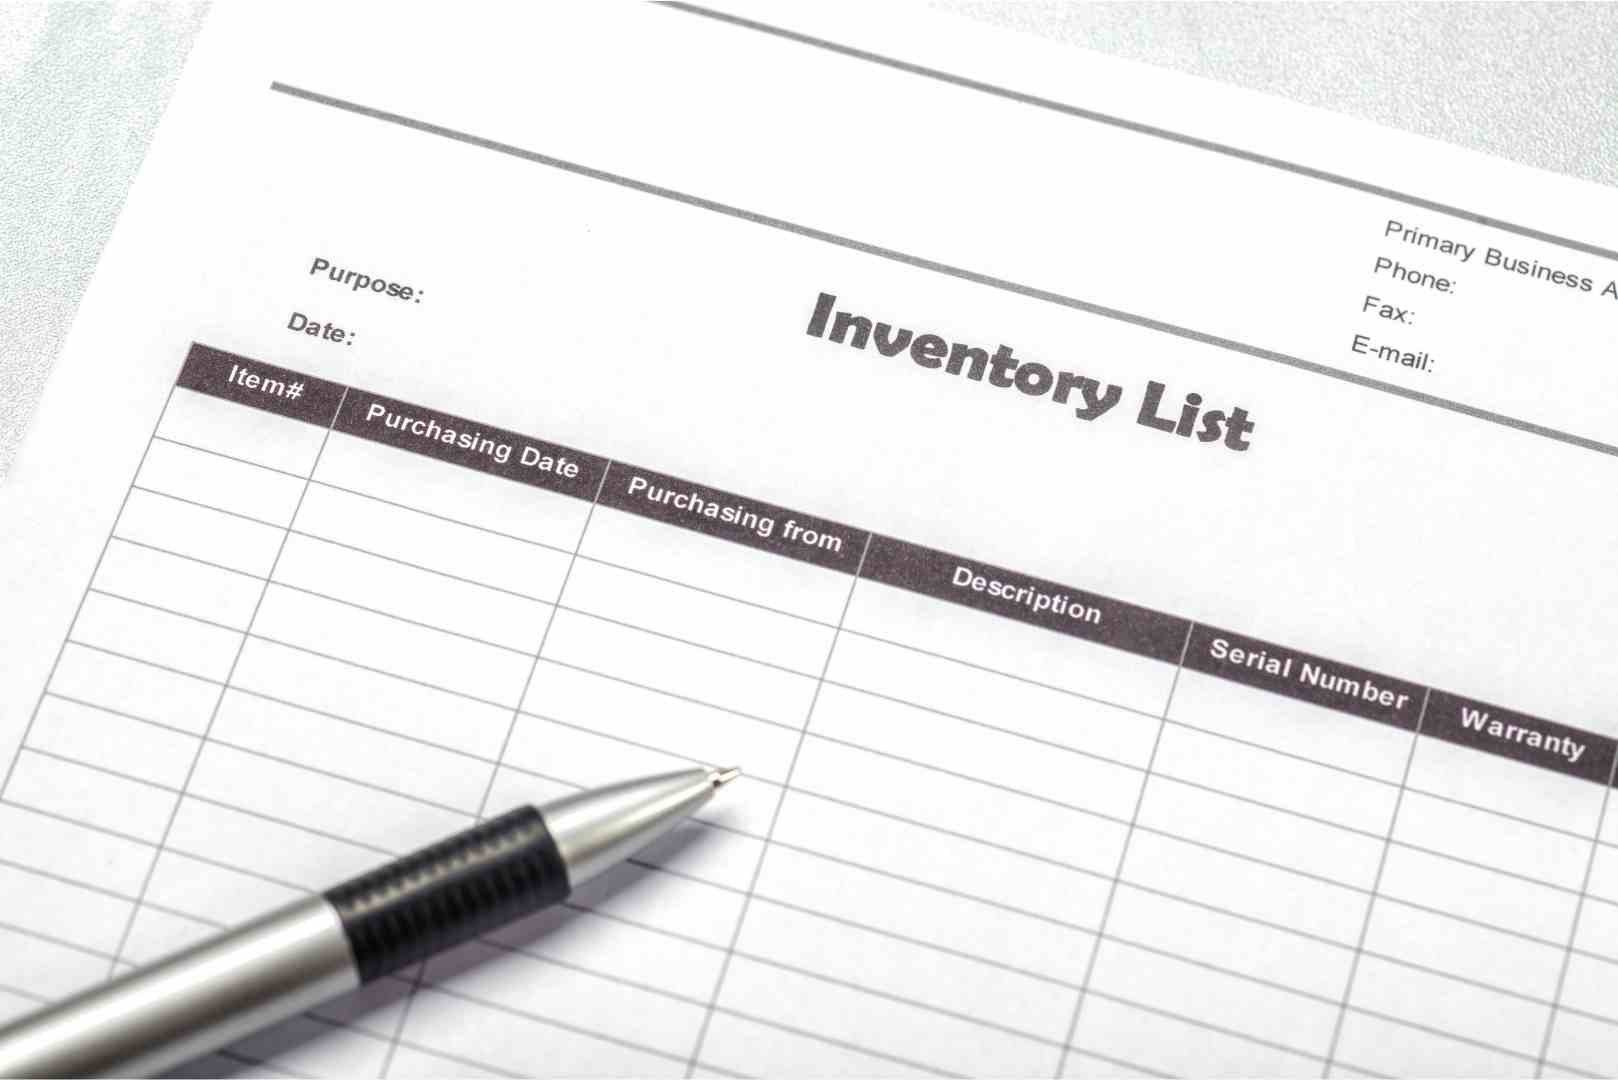 inventory list